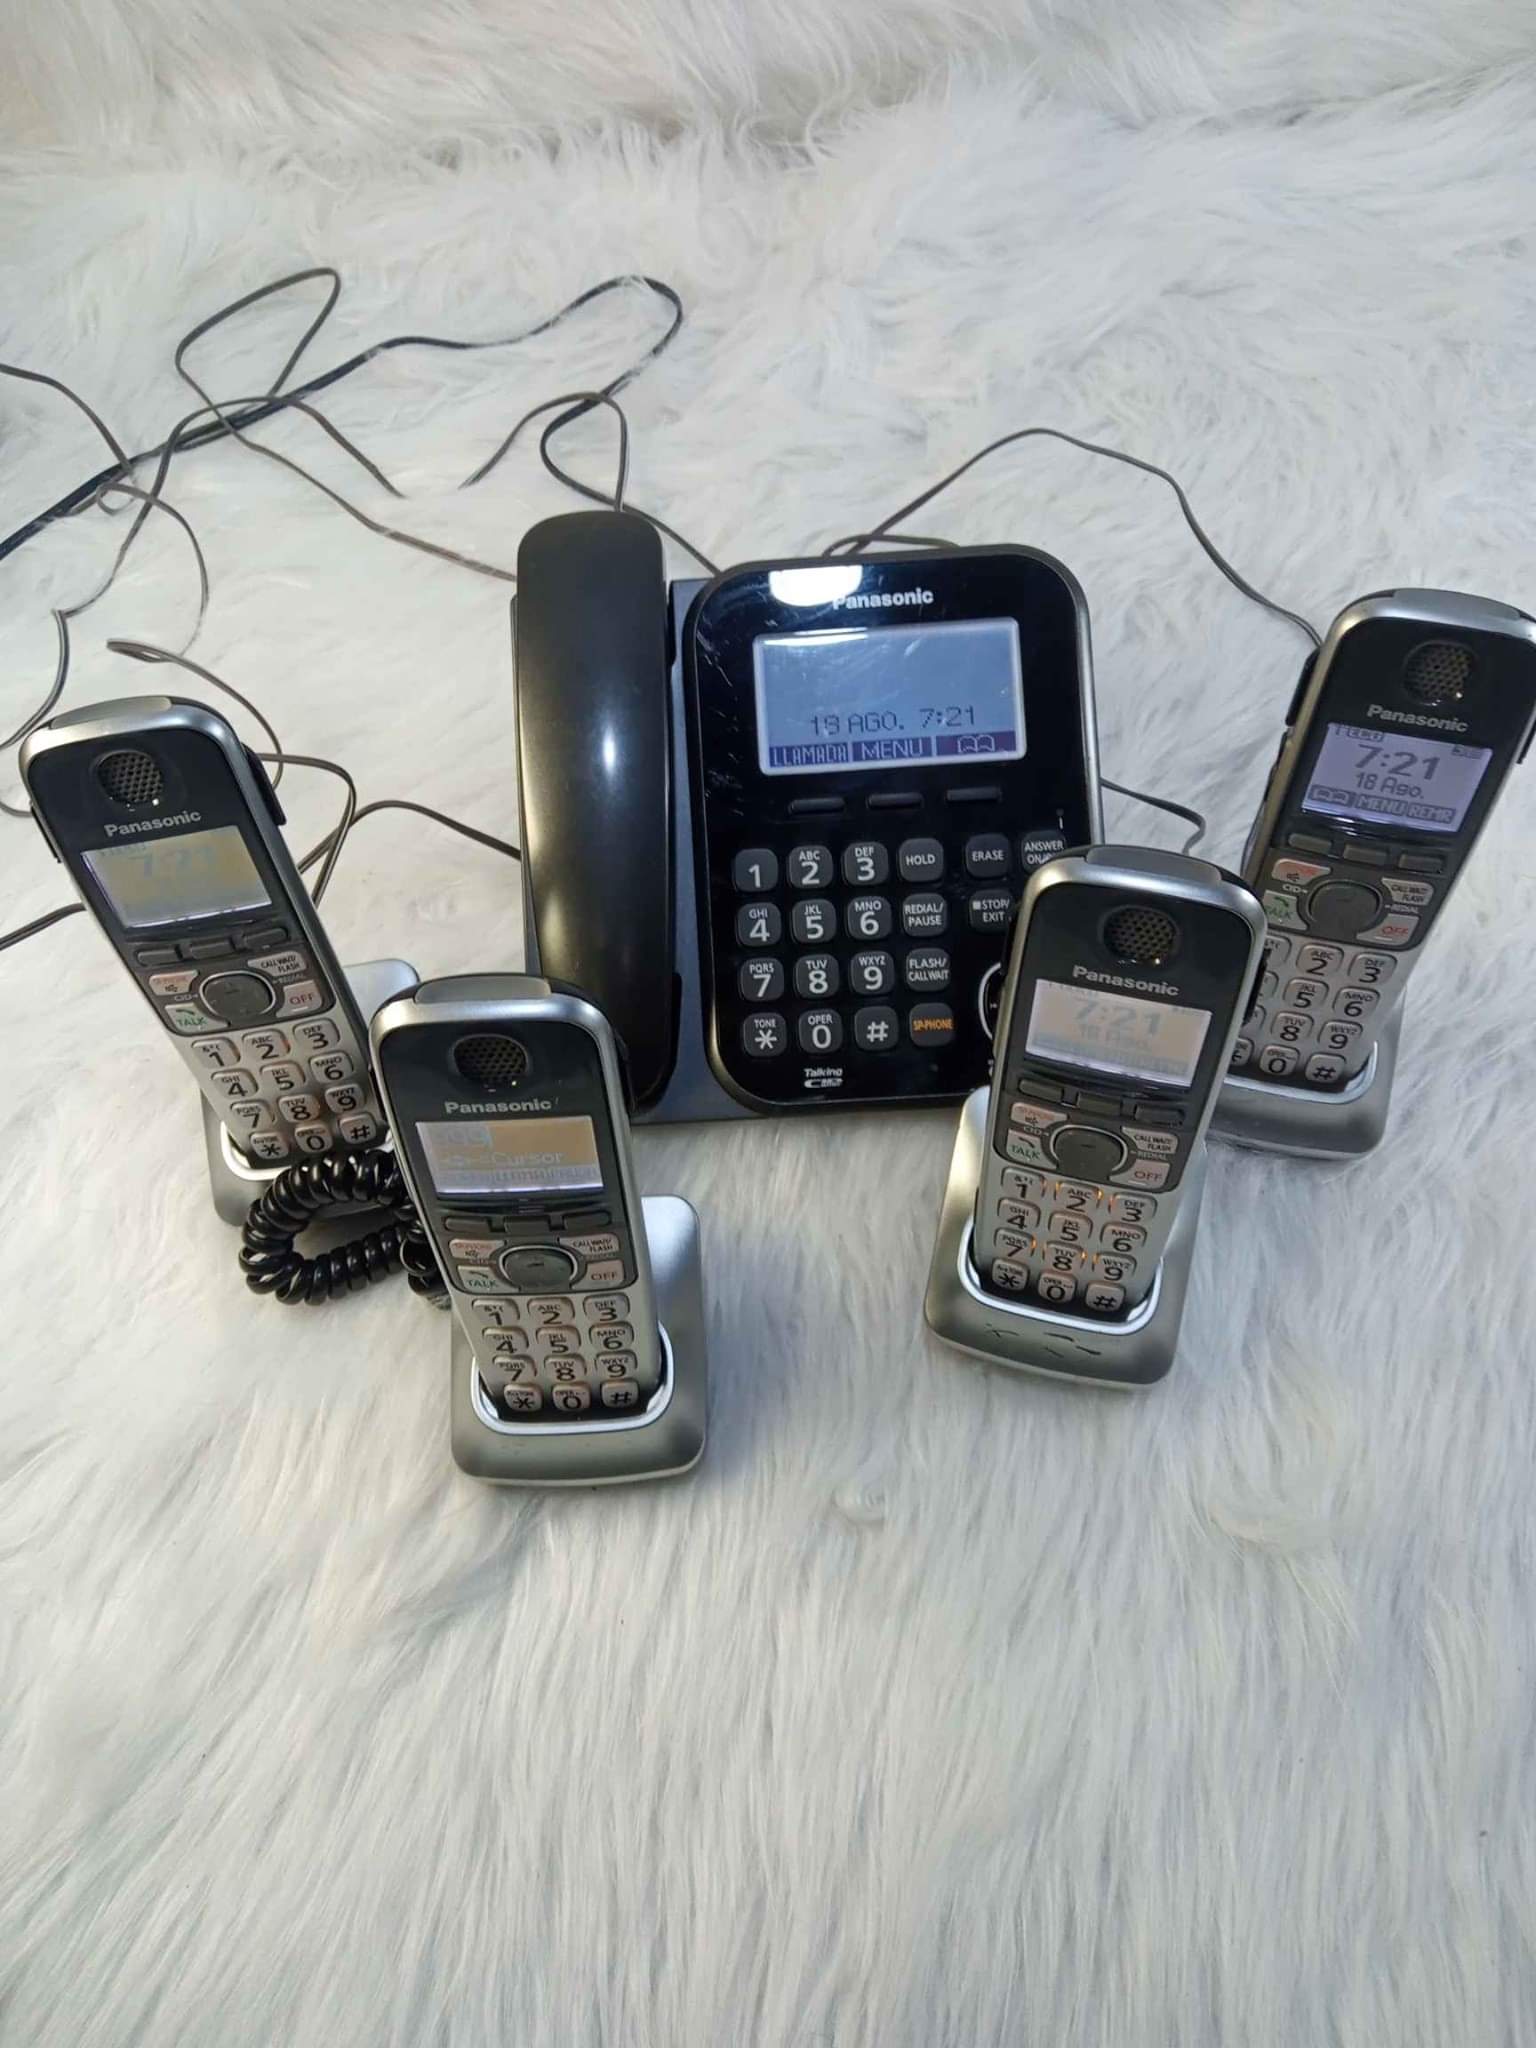 Ganga remato lindos y exclusivos teléfonos inalámbricos de uso profesional edición limitada